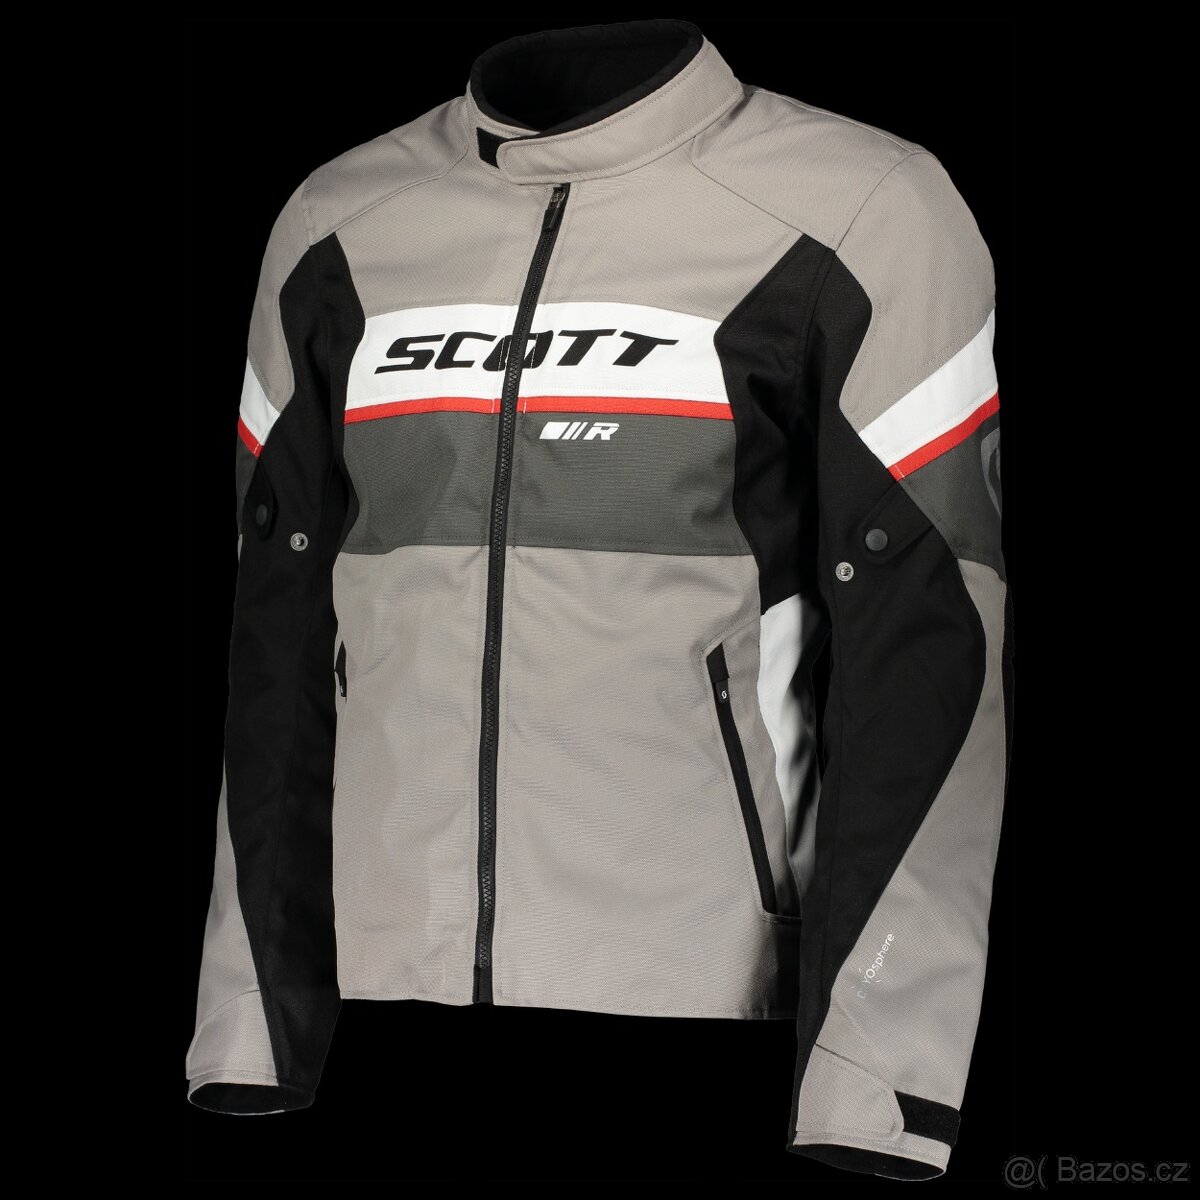 Textilní bunda Scott SportR DP grey/white vel. M, L